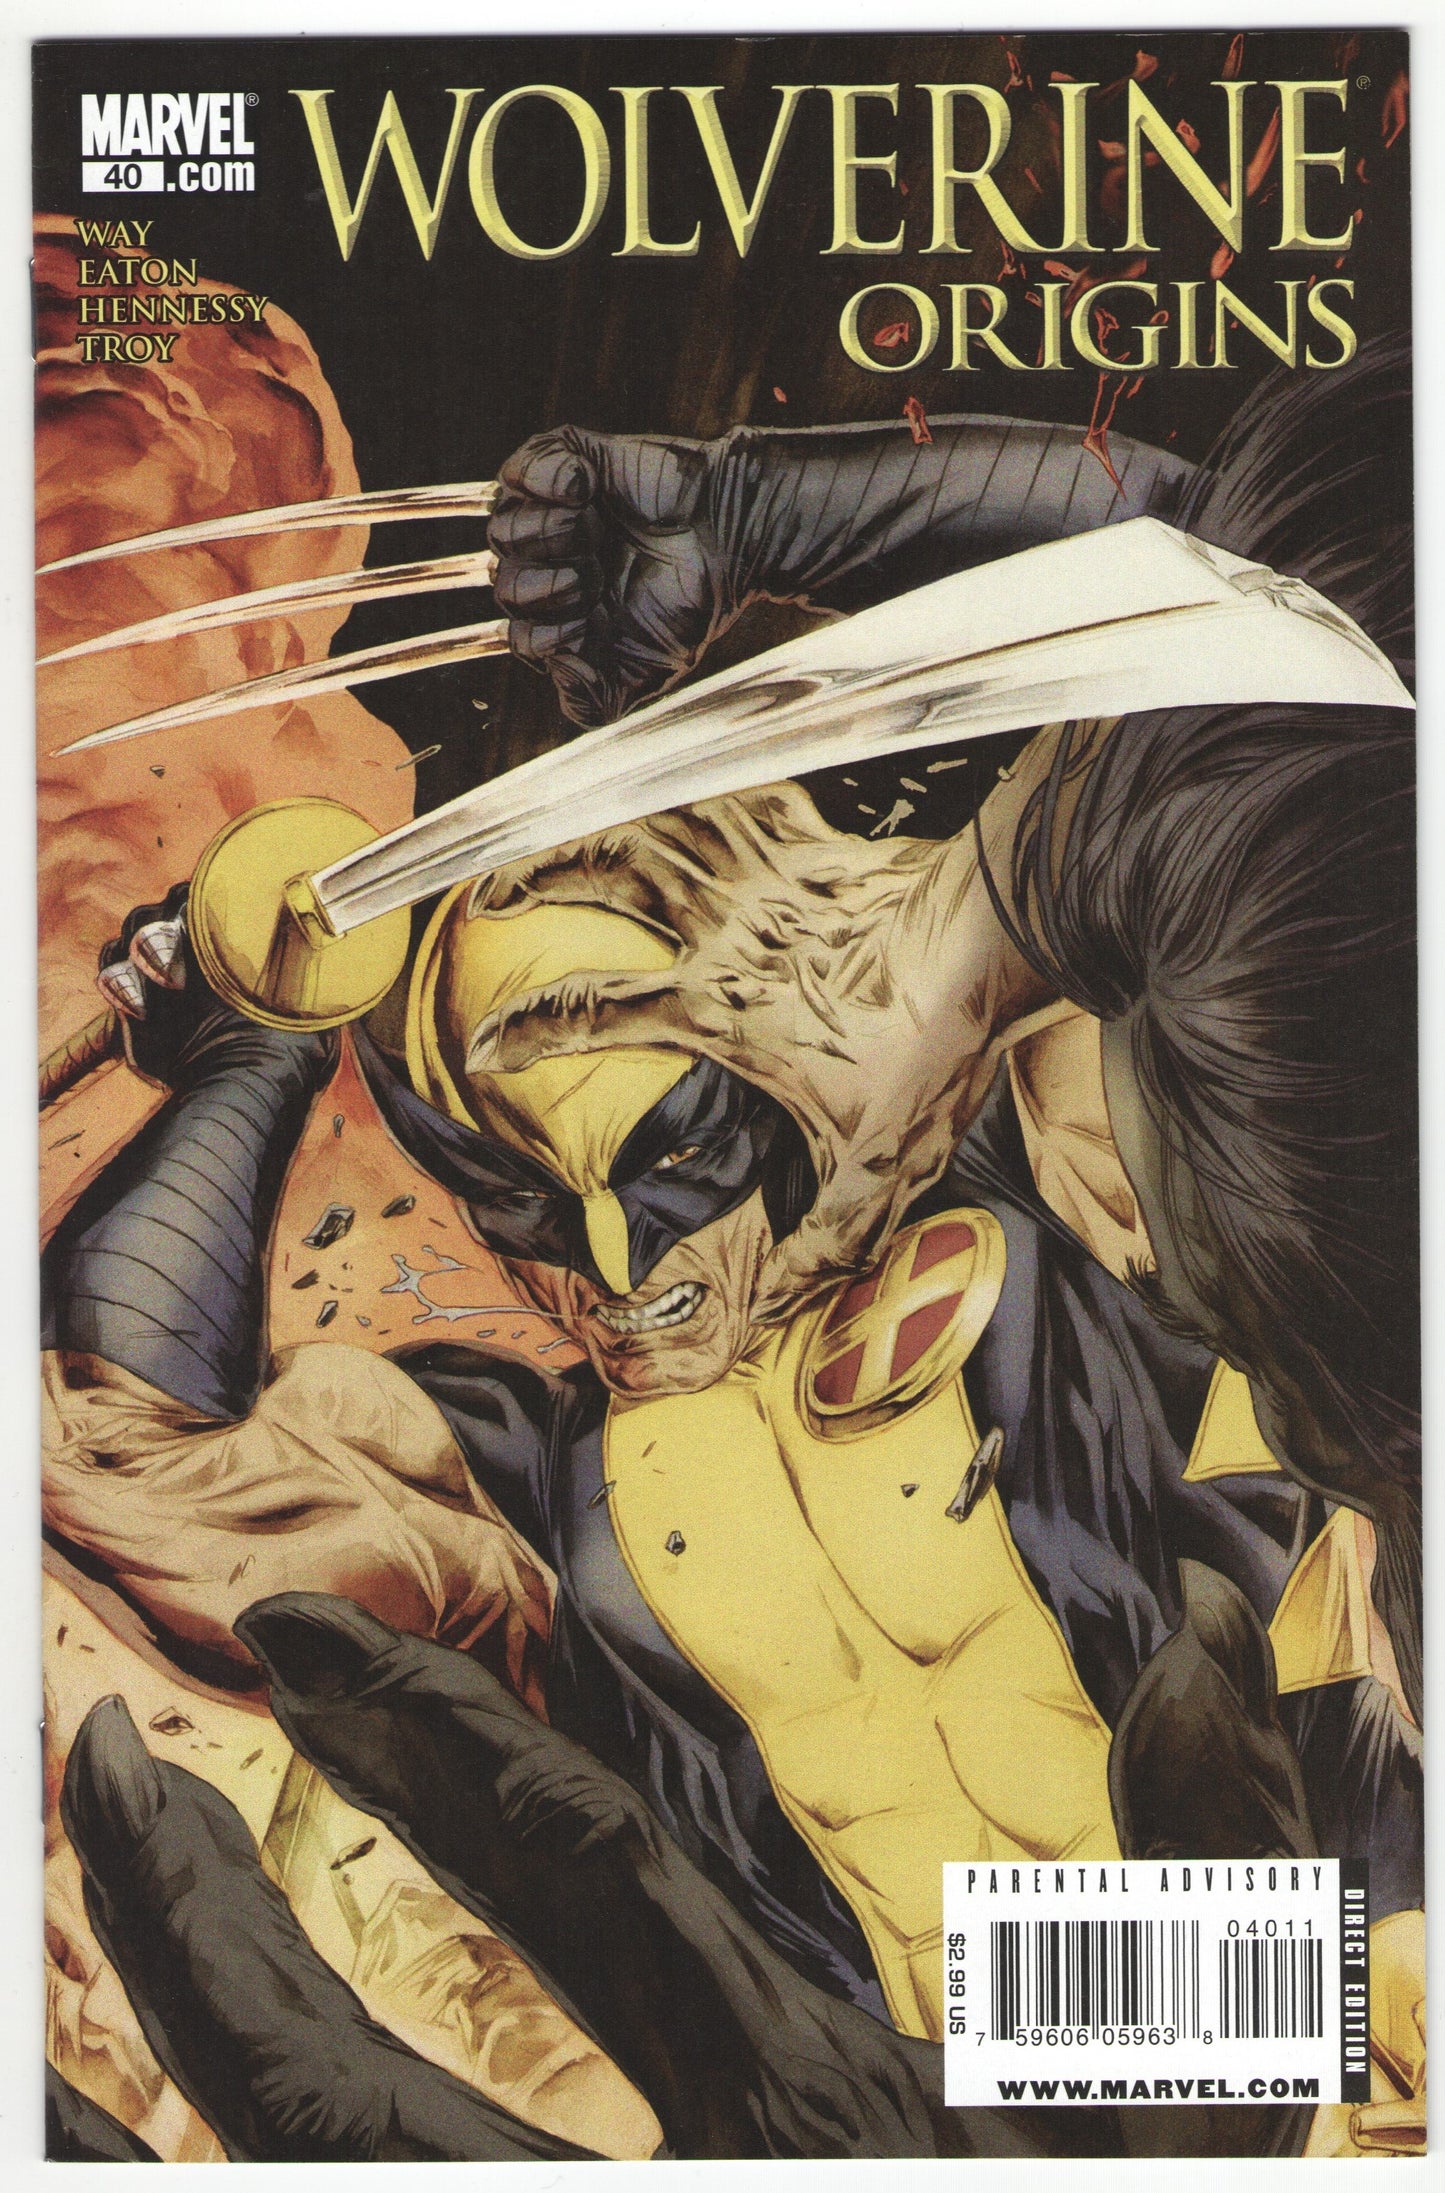 Wolverine Origins “Romulus” Complete Story Arc (2009)